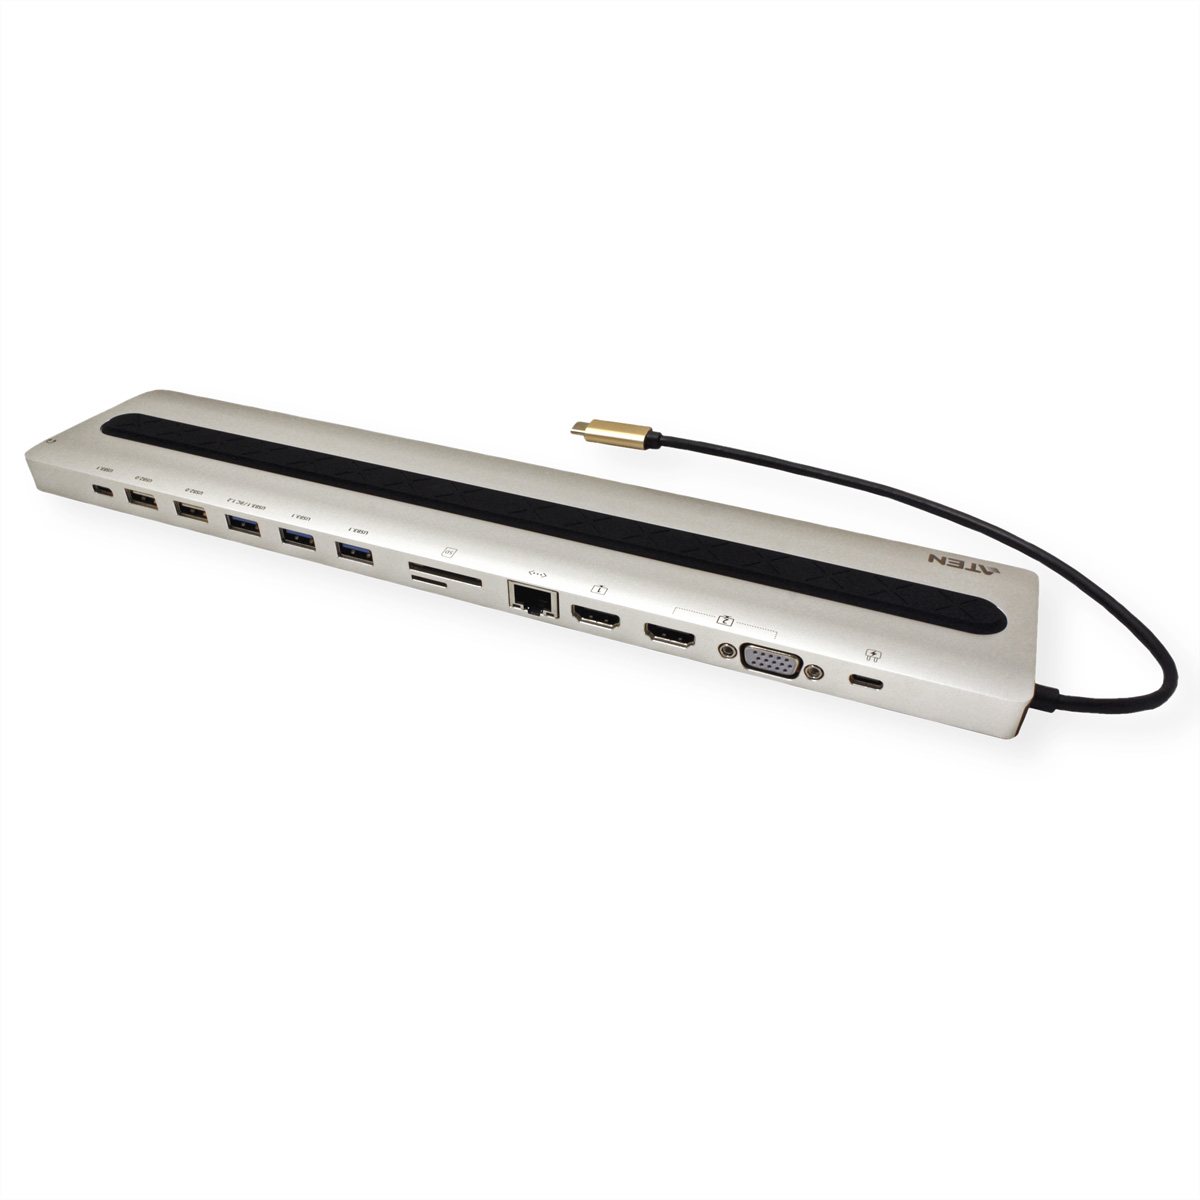 ATEN UH3237 USB-DisplayPort Dock schwarz gold / Power Multiport USB-C Adapter, mit Passthrough